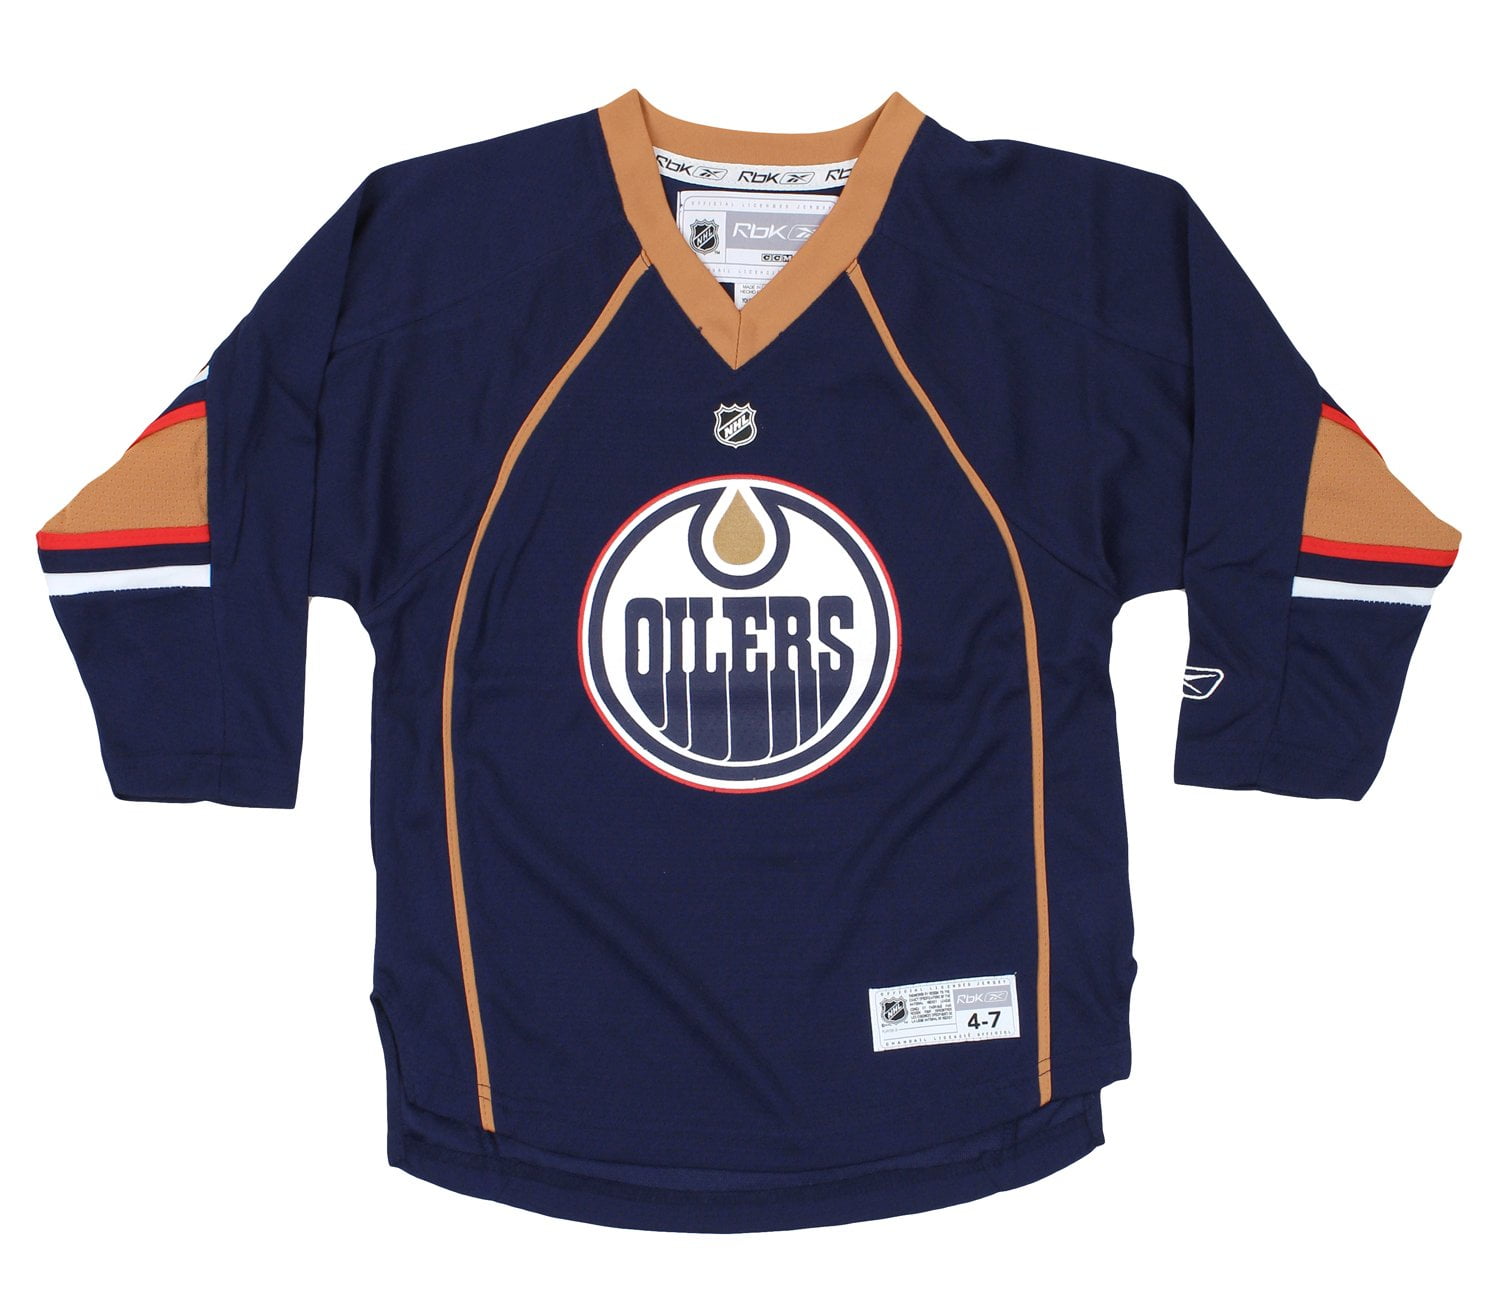 Edmonton Oilers premier jersey